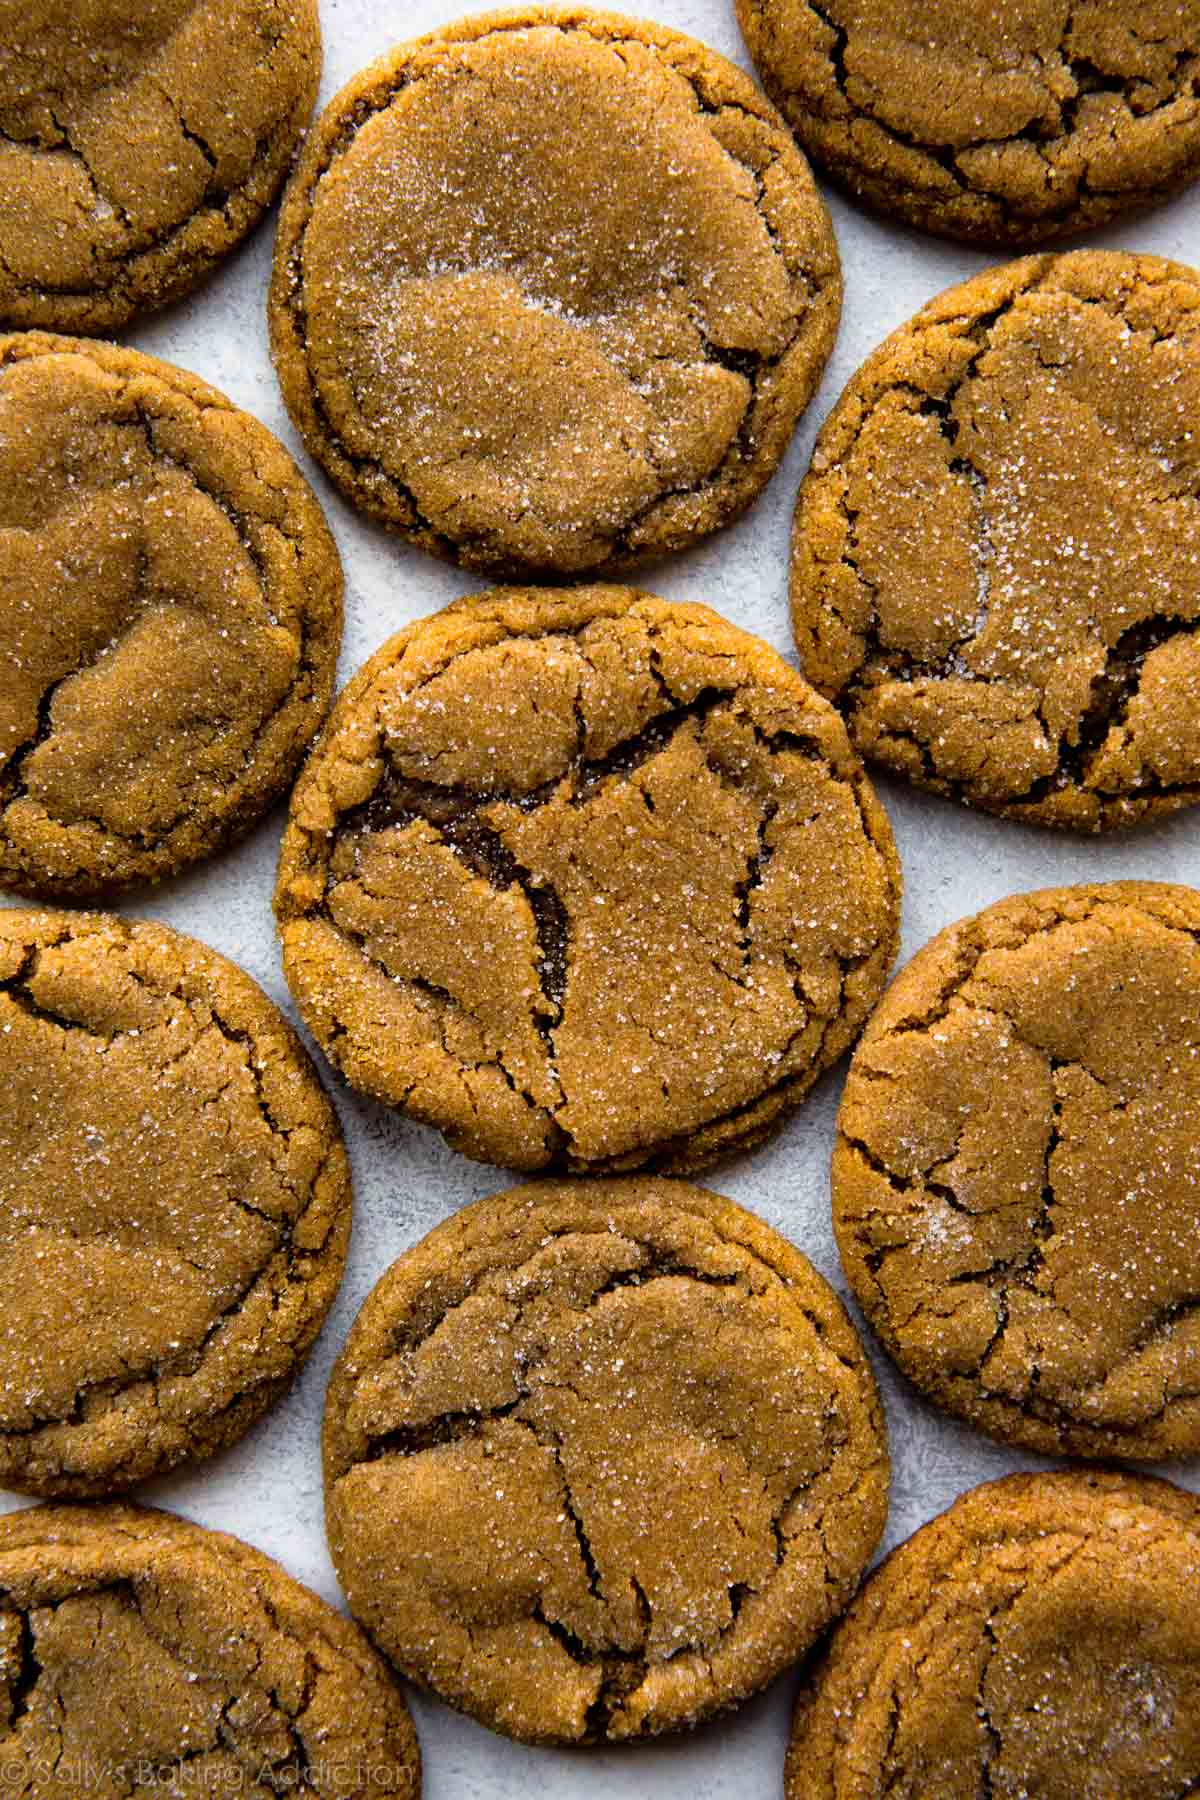 molasses cookies